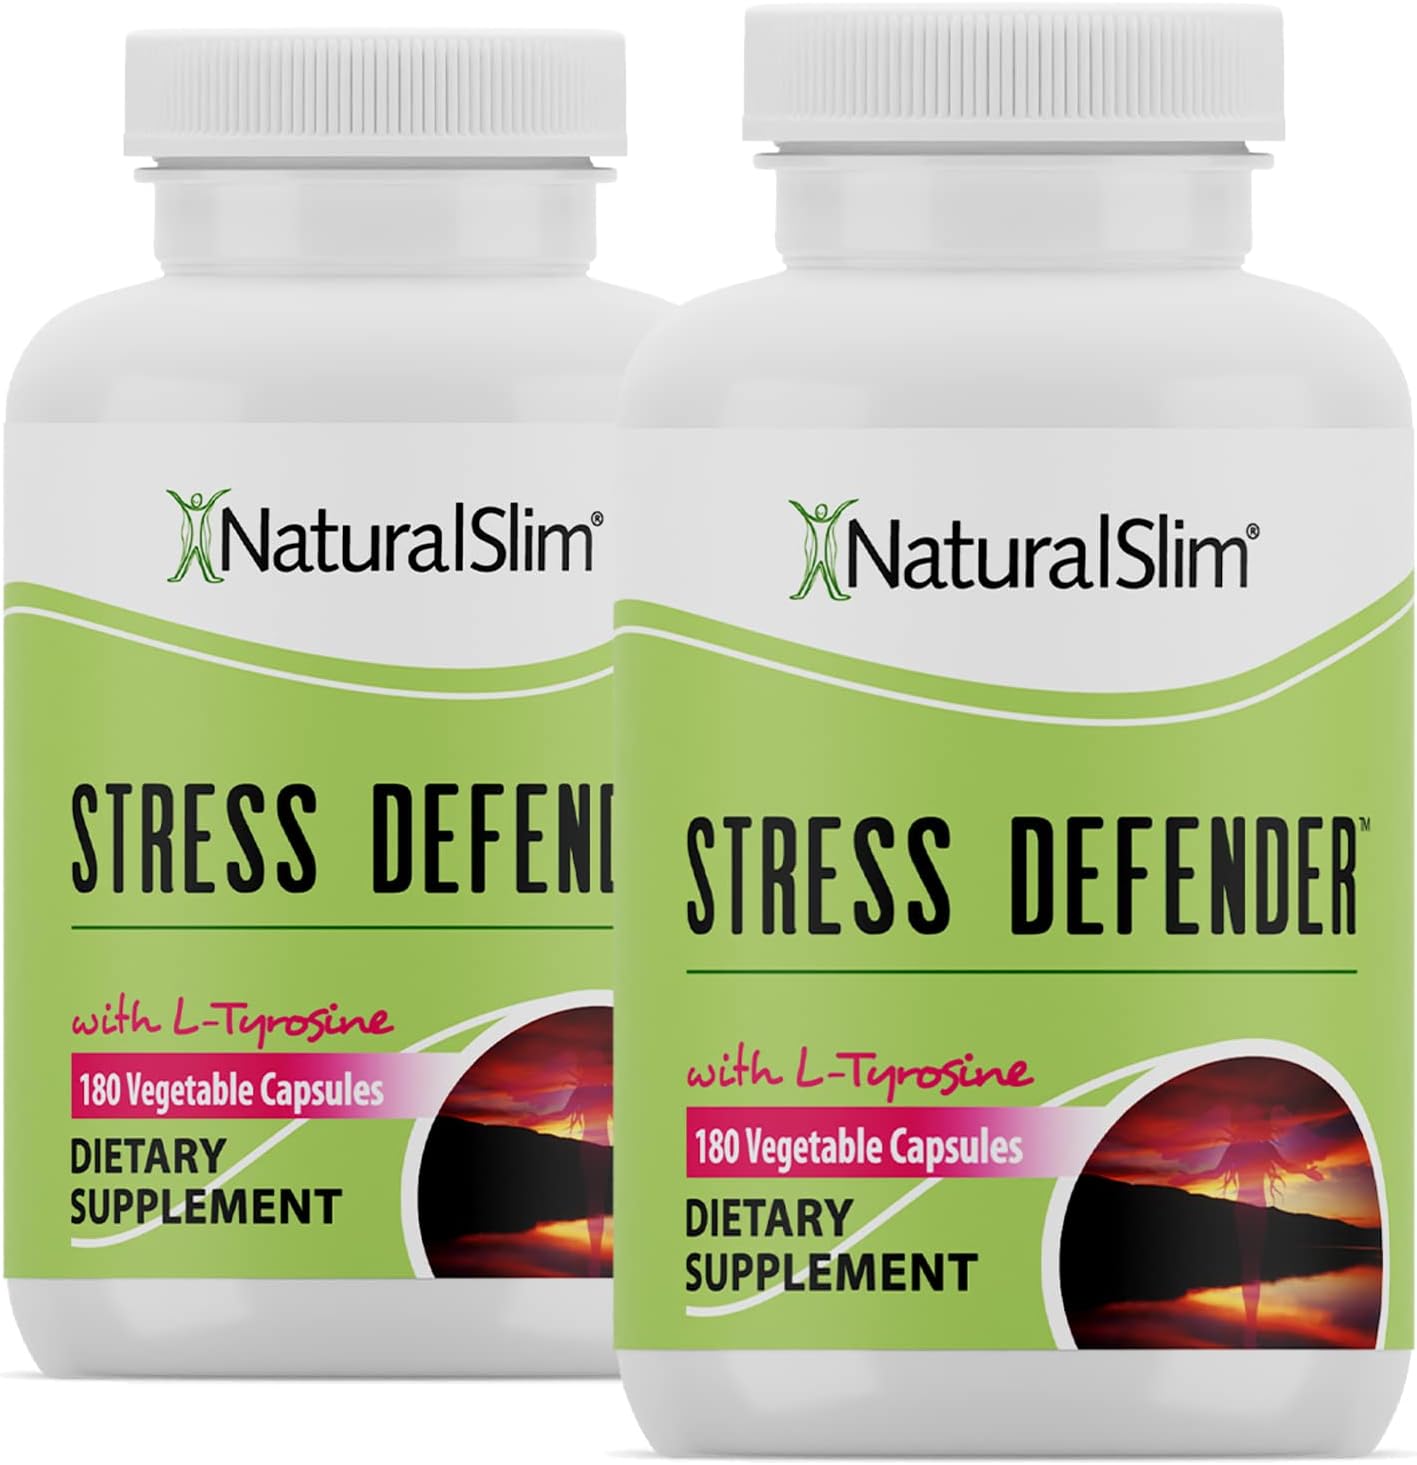 NaturalSlim Stress Defender L Tyrosine  Pantothenic Acid (Vitamin B5) - Natural Supplements for Energy, Focus, Cortisol Level and Stress Support - Keto Friendly - 180 Vegetable Capsules 2 Pack